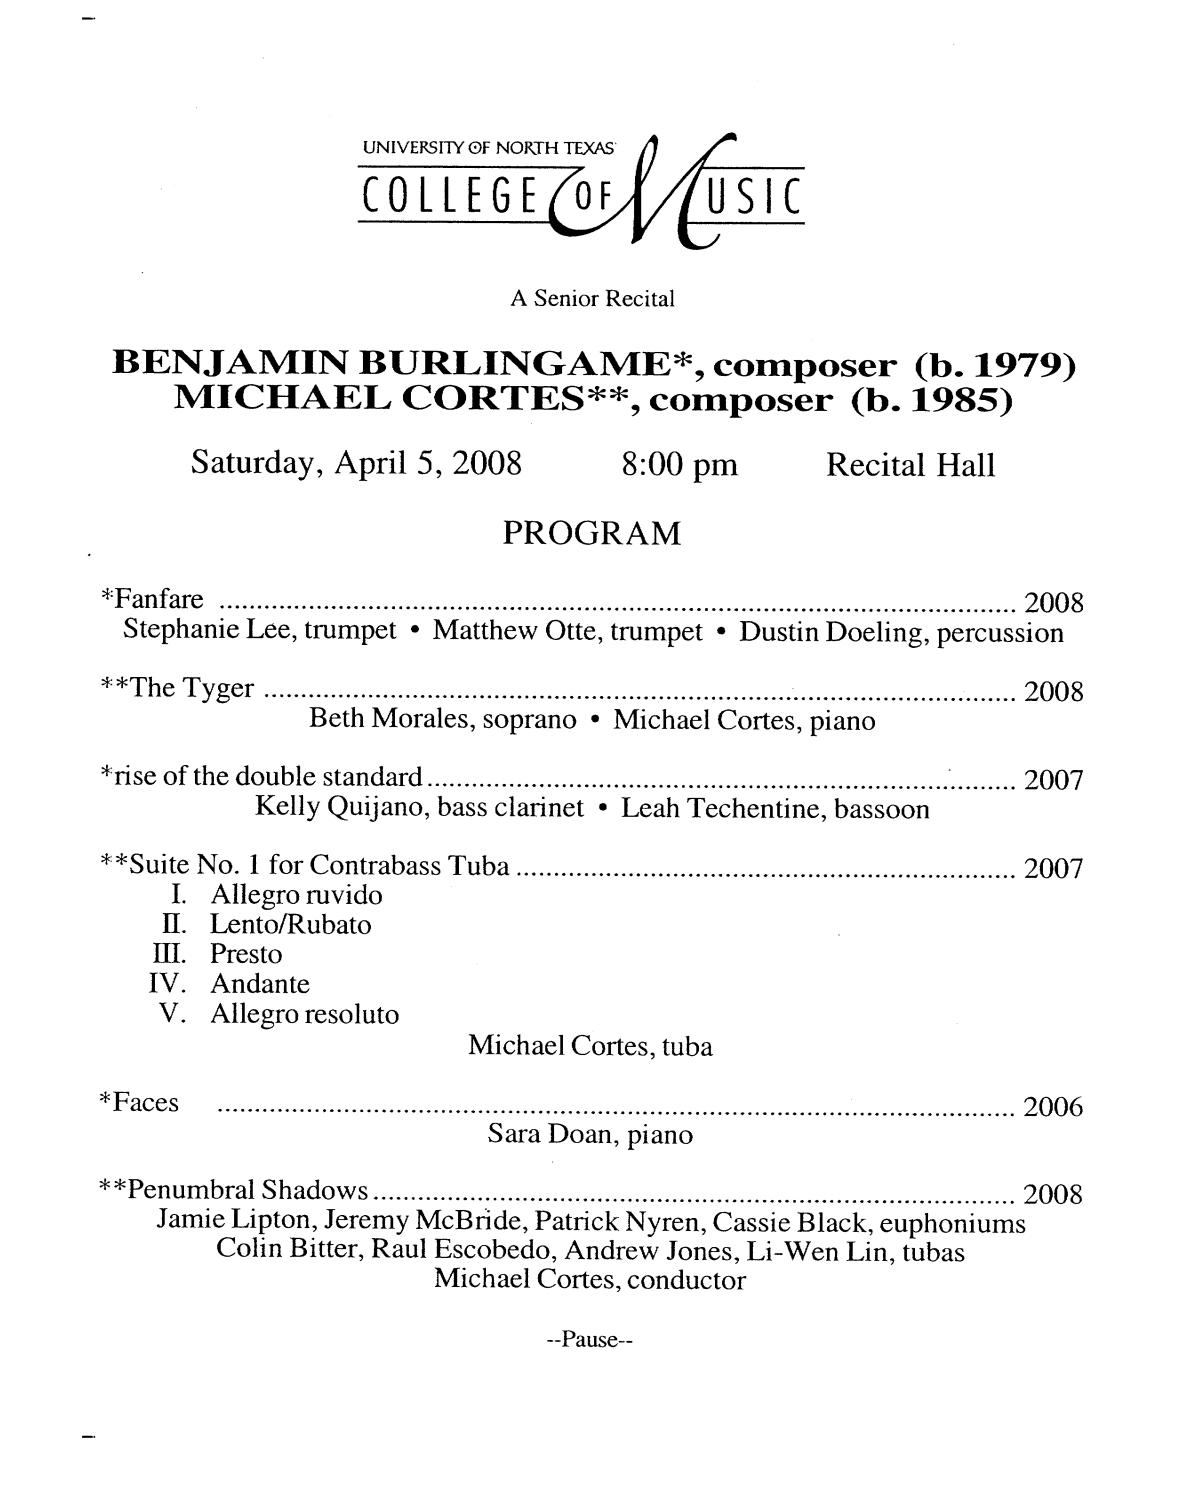 College of Music program book 2007-2008 Student Performances Vol. 2
                                                
                                                    129
                                                